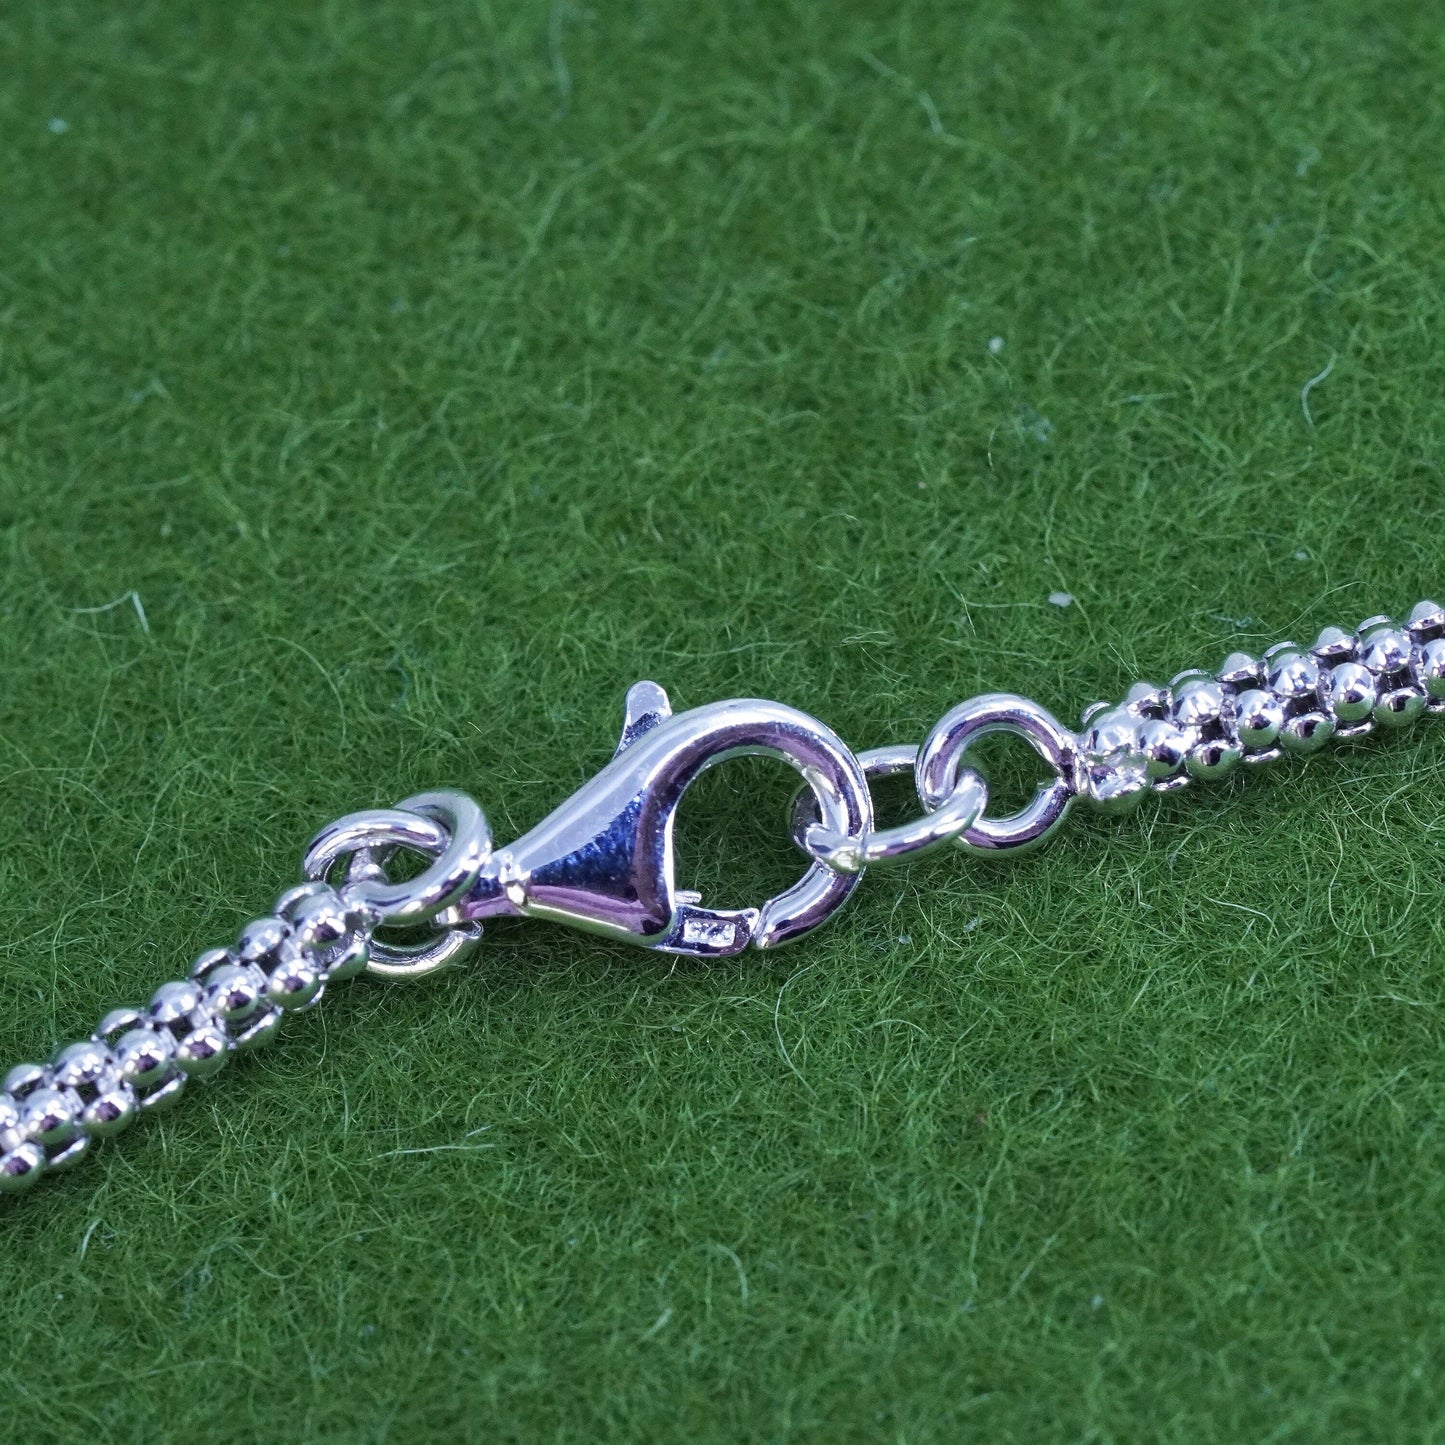 18", Vintage sterling silver necklace, popcorn chain ruby heart pendant diamond